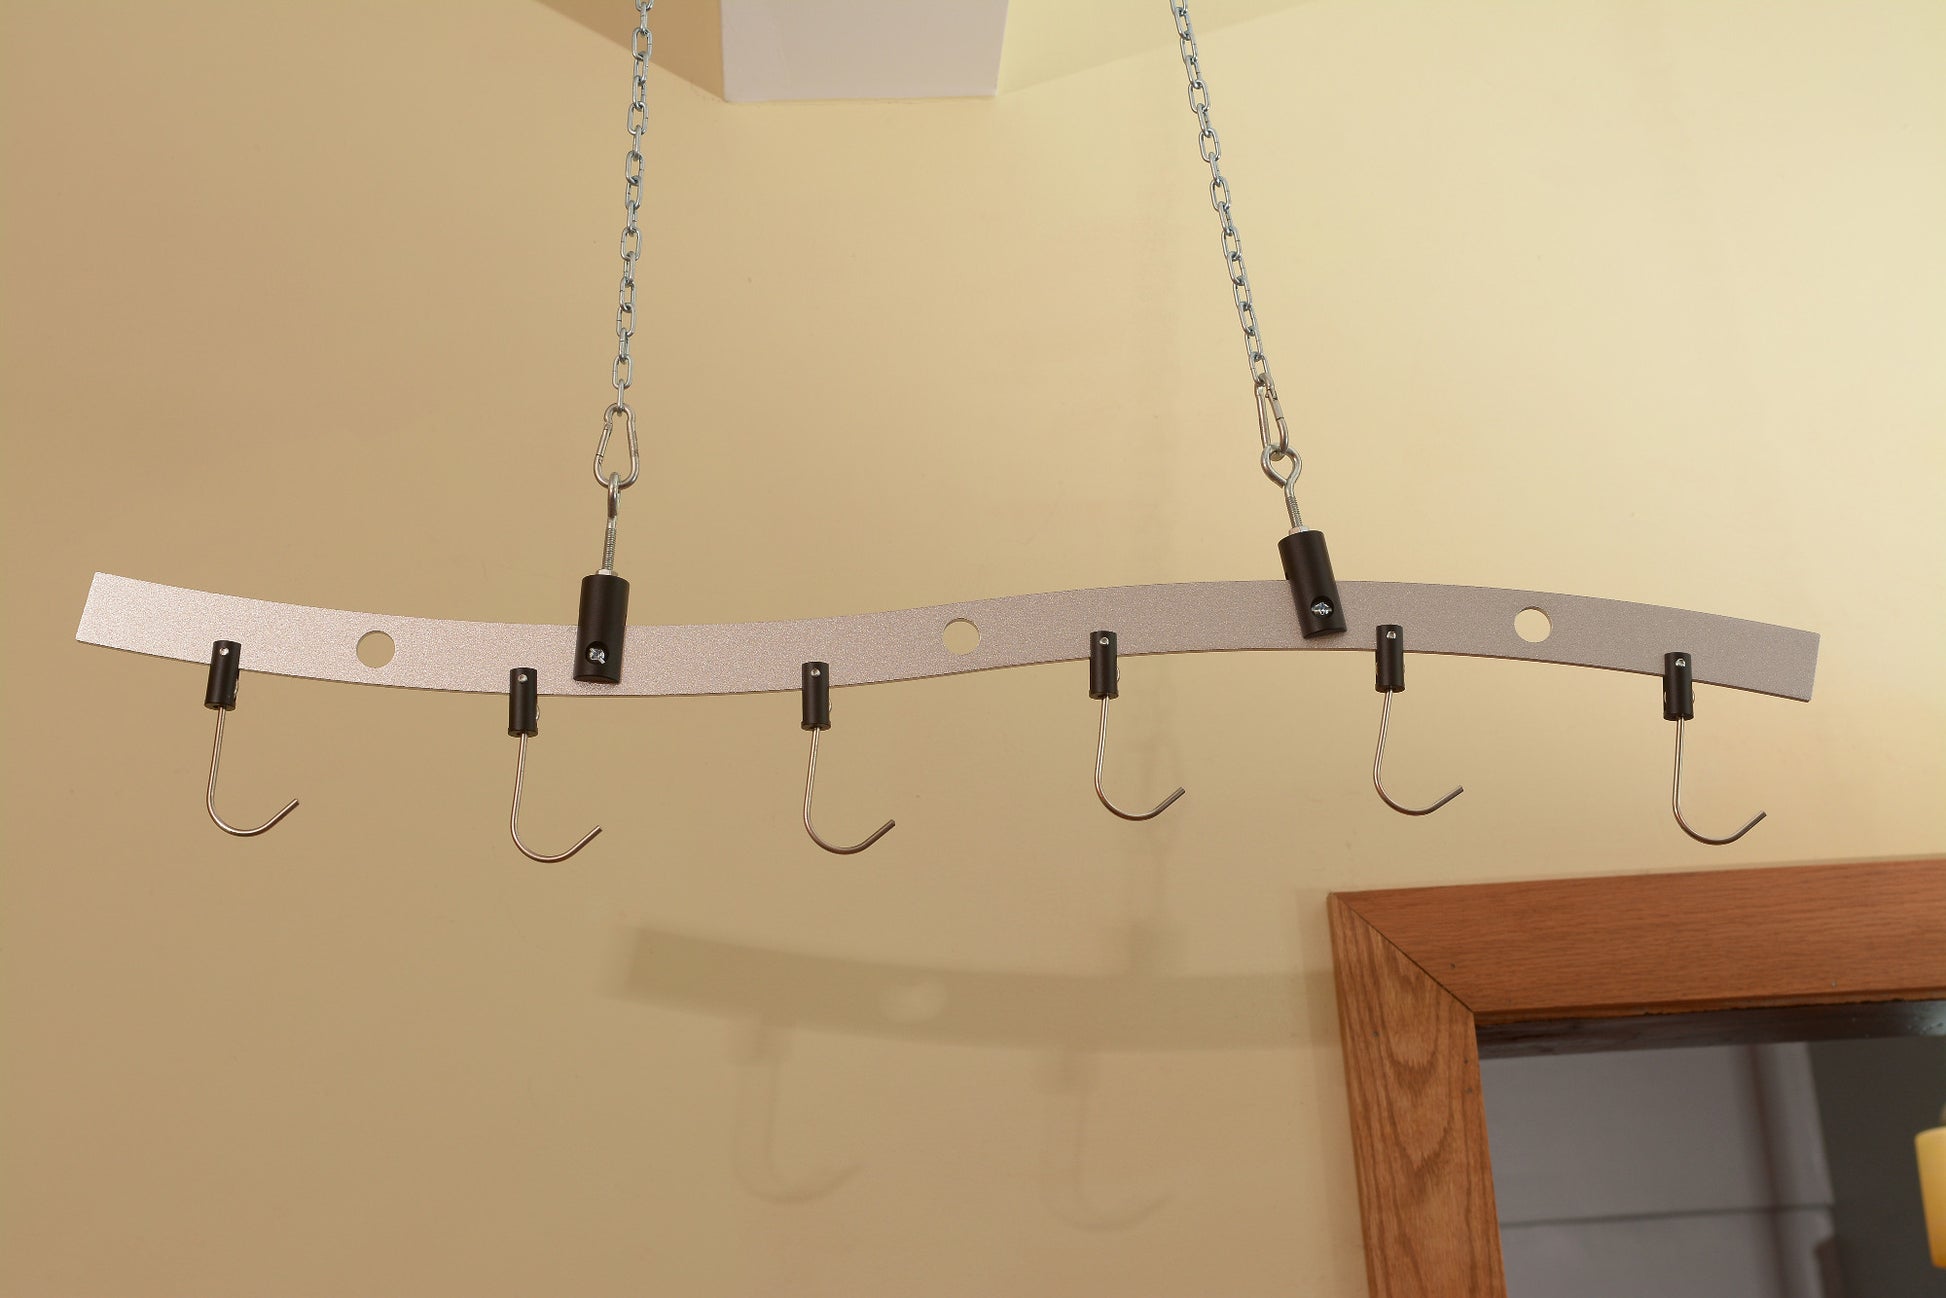 Zojila.com : Beni Pot Hanger, Aluminum Spine Pot Hanger with 6 Sturdy Hooks, Anodized Silver Finish : Home Improvement